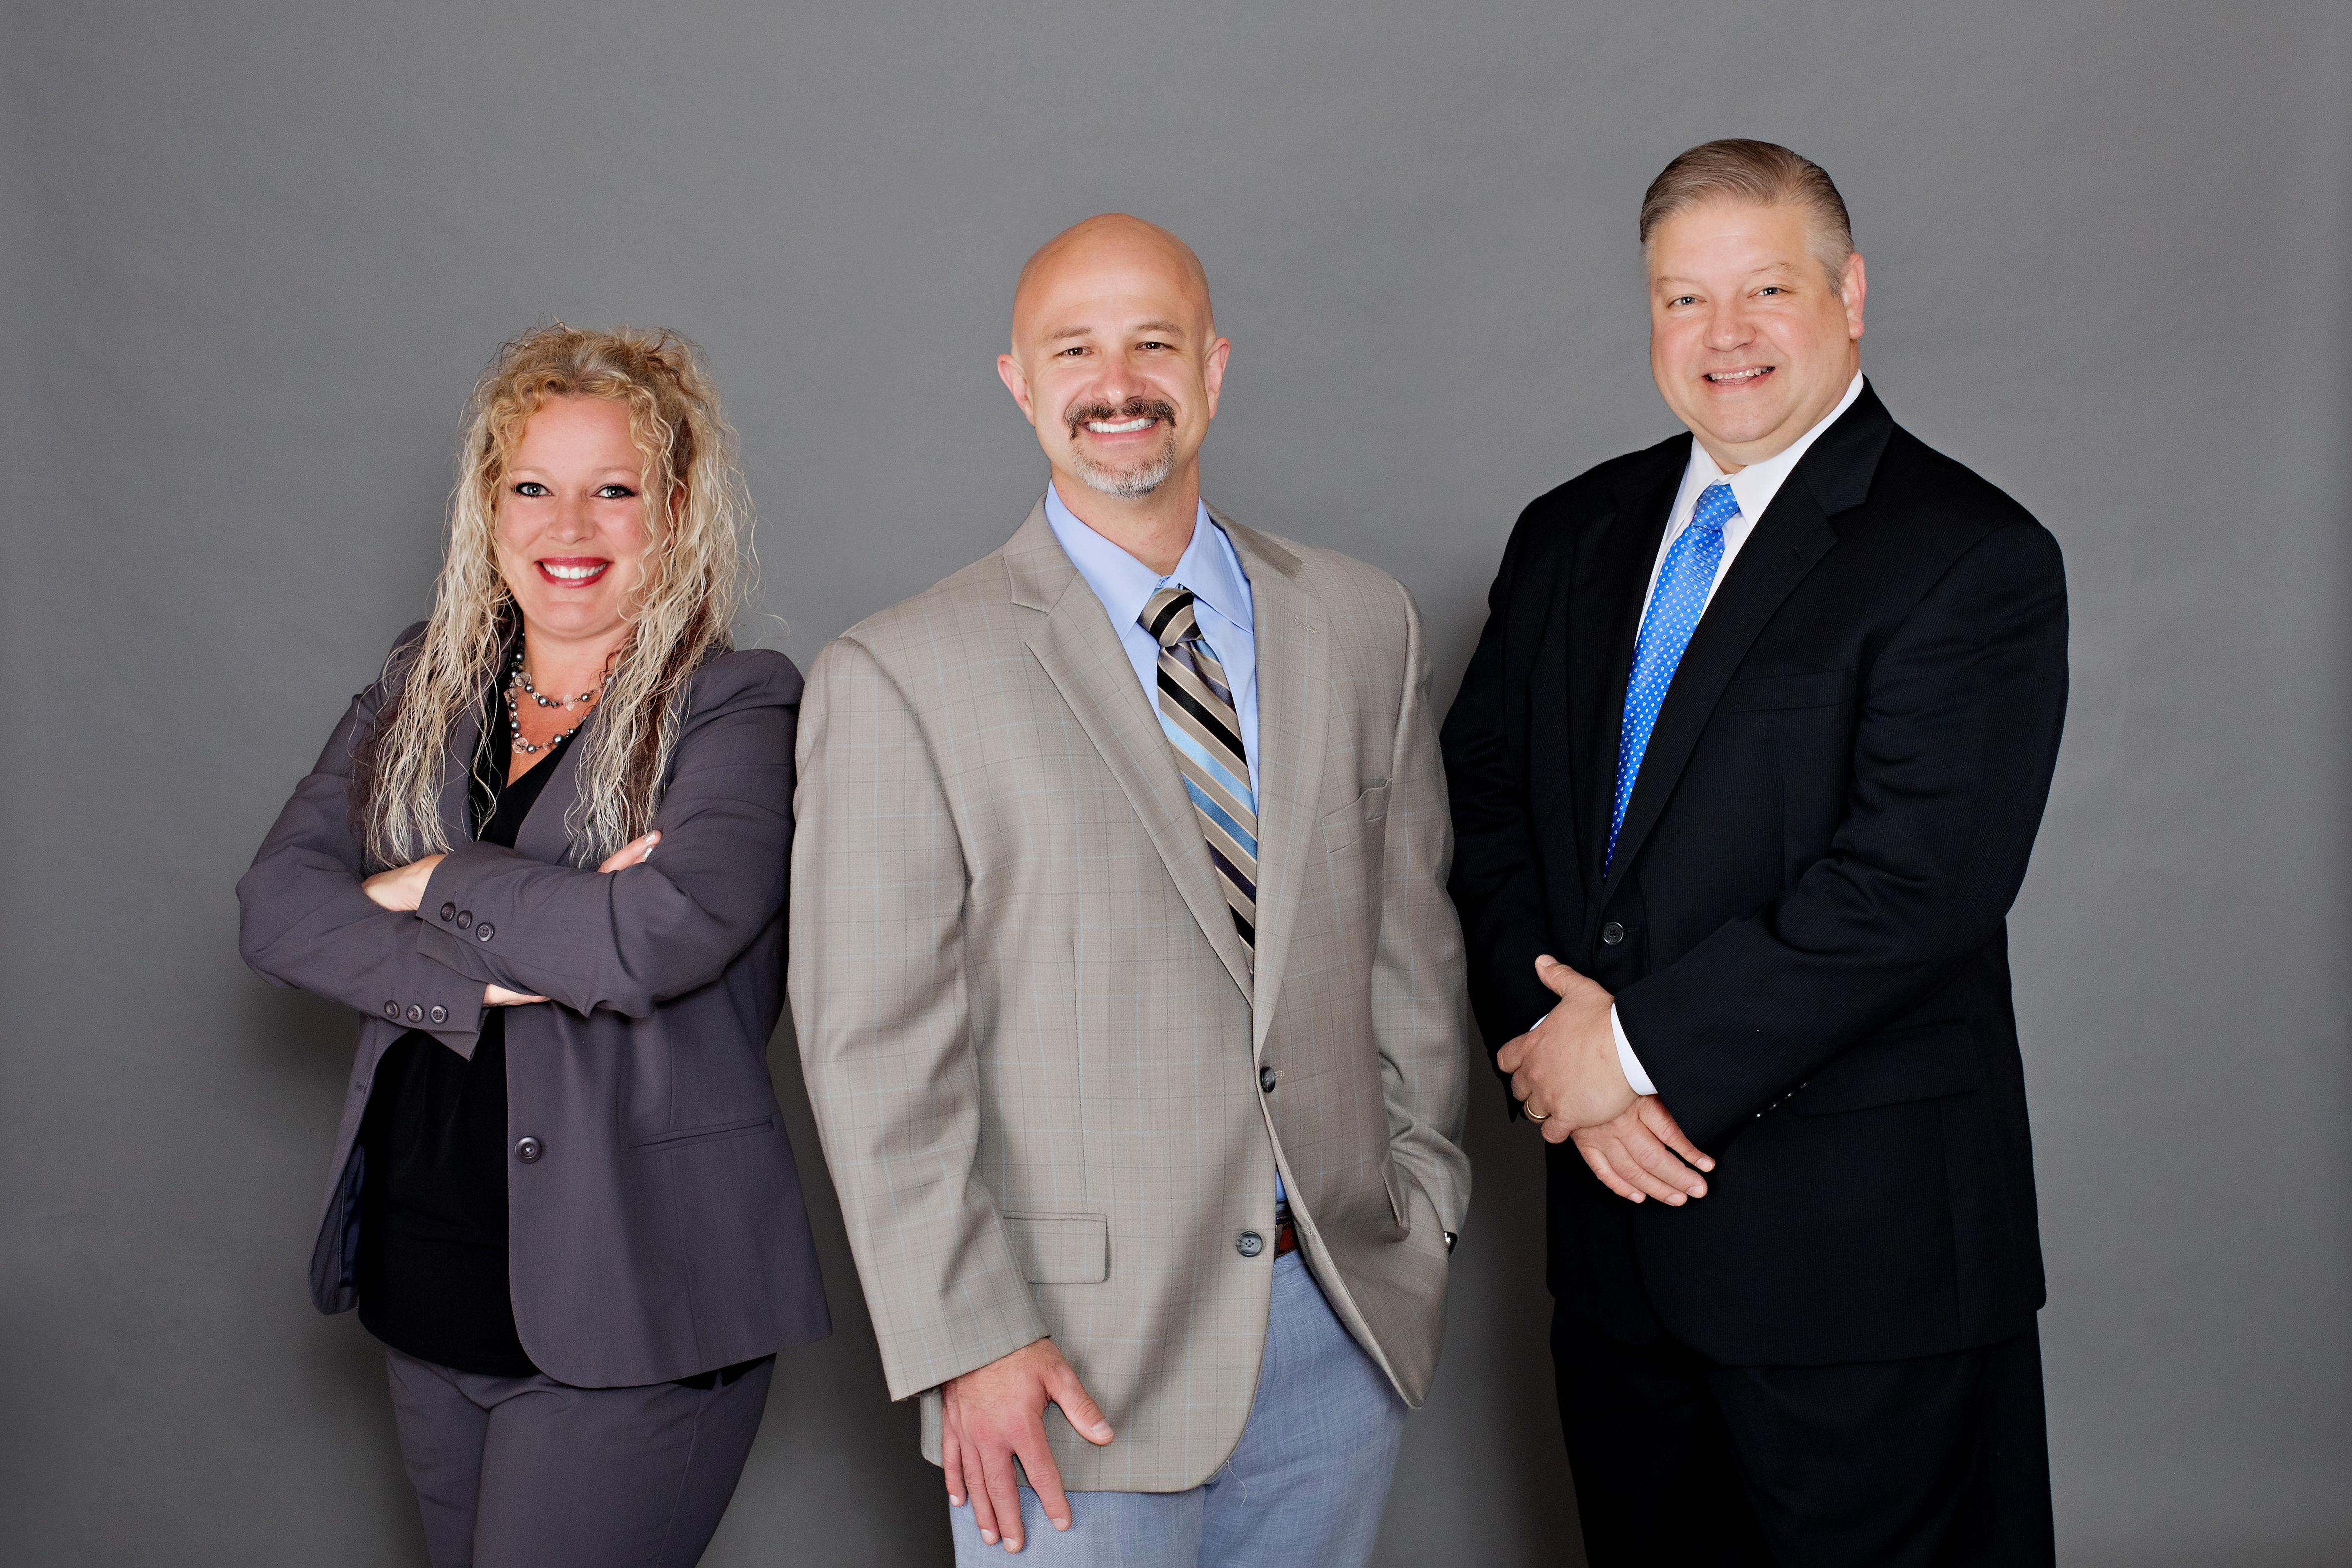 wealth advisors team photo